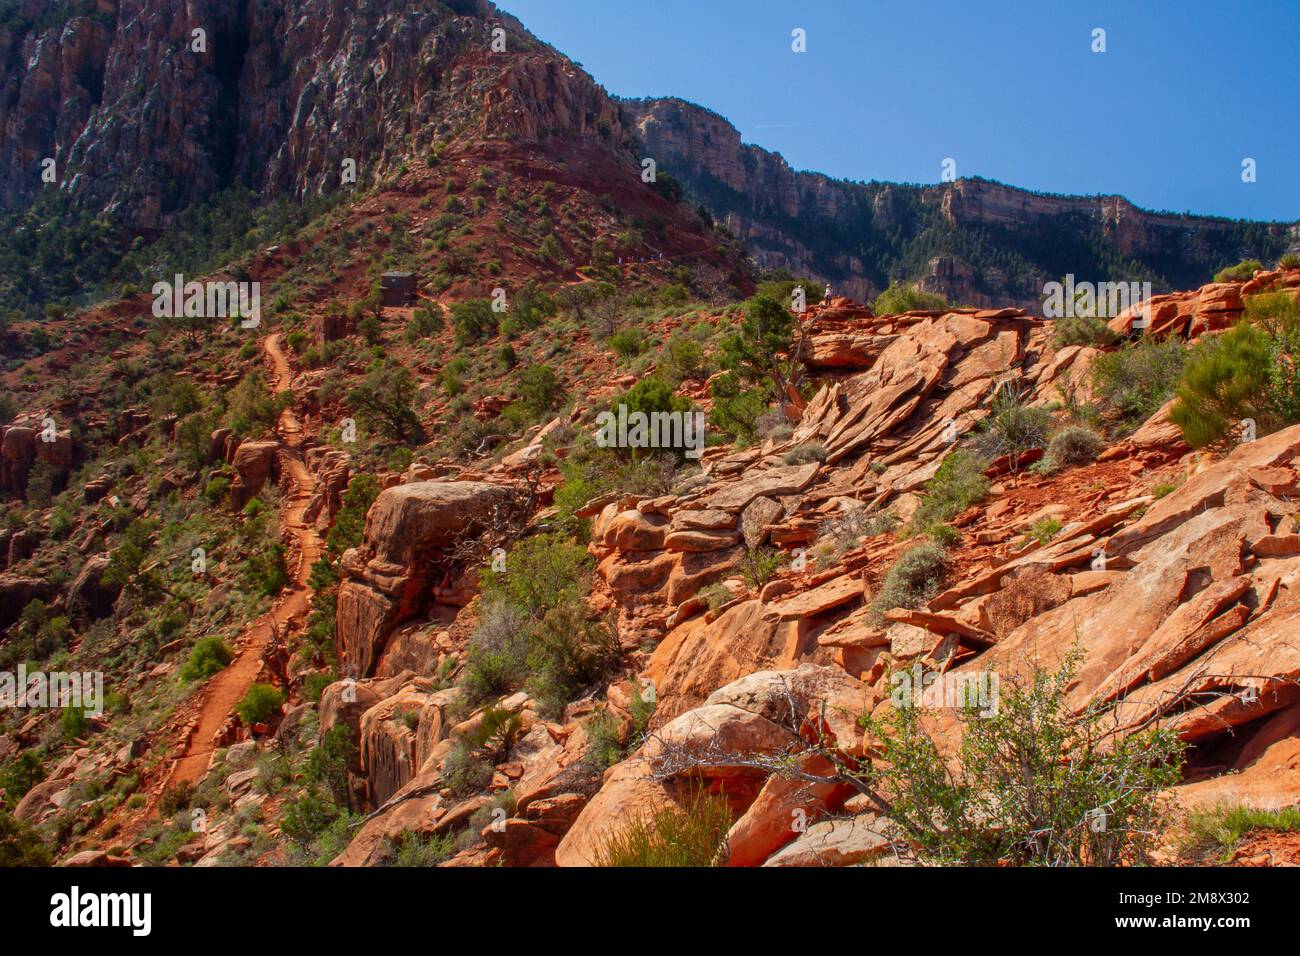 South Kaibab Trail of Grand Canyon National Park, Arizona, USA. (2011) Stock Photo